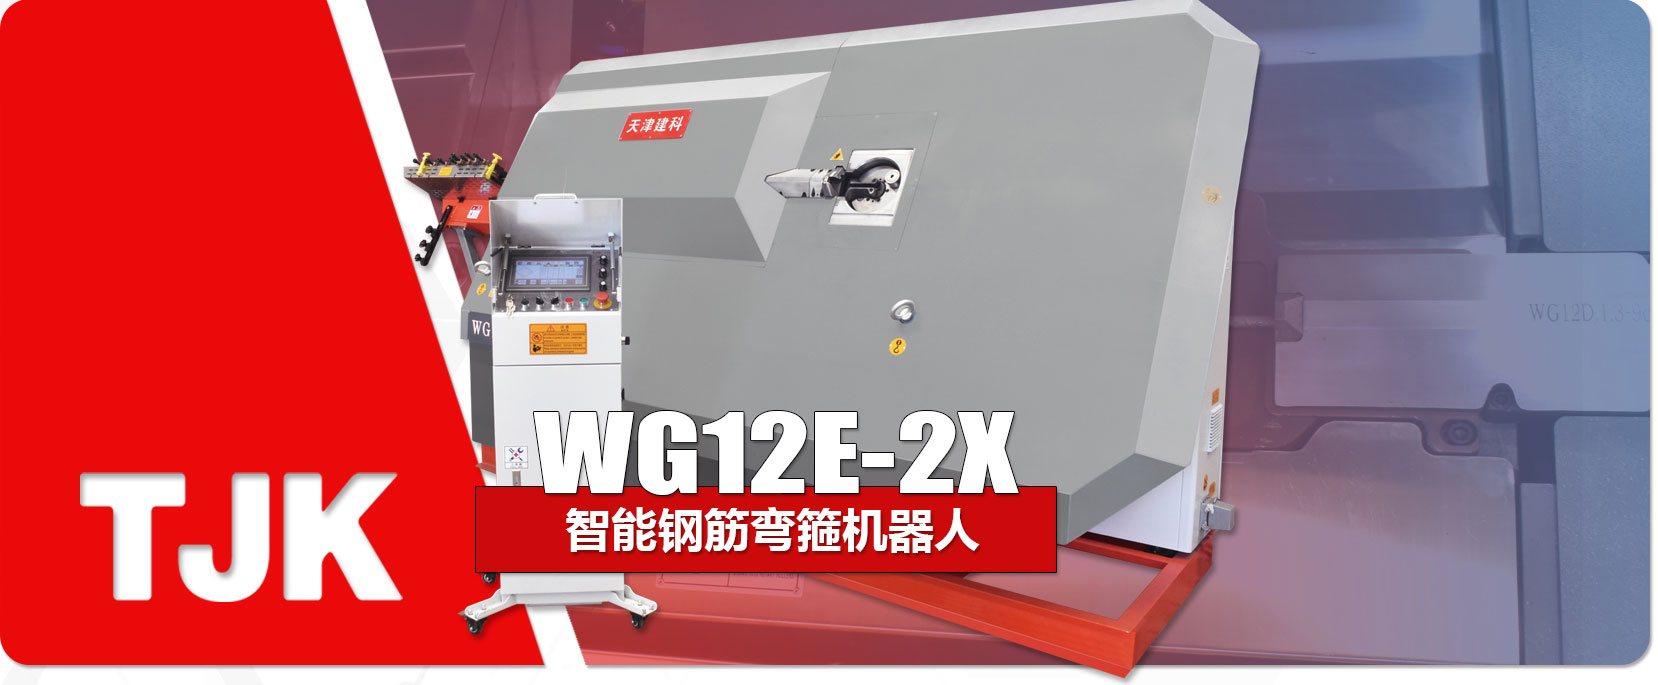 WG12E-2X产品特点_03.jpg